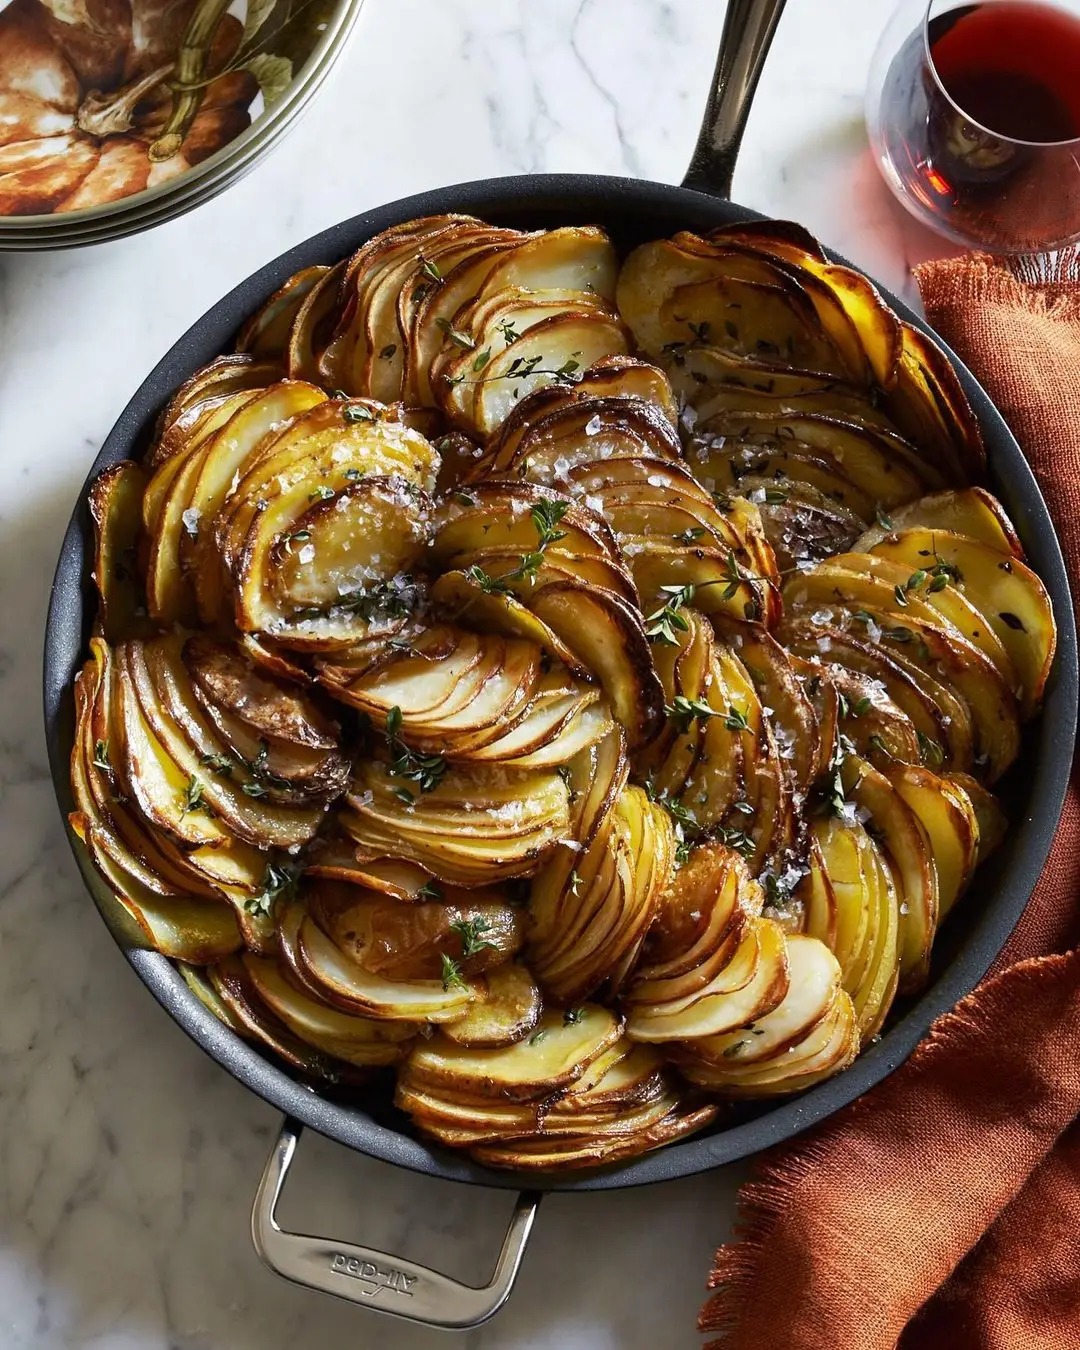 8 Awesome Potato Recipes to Try ...